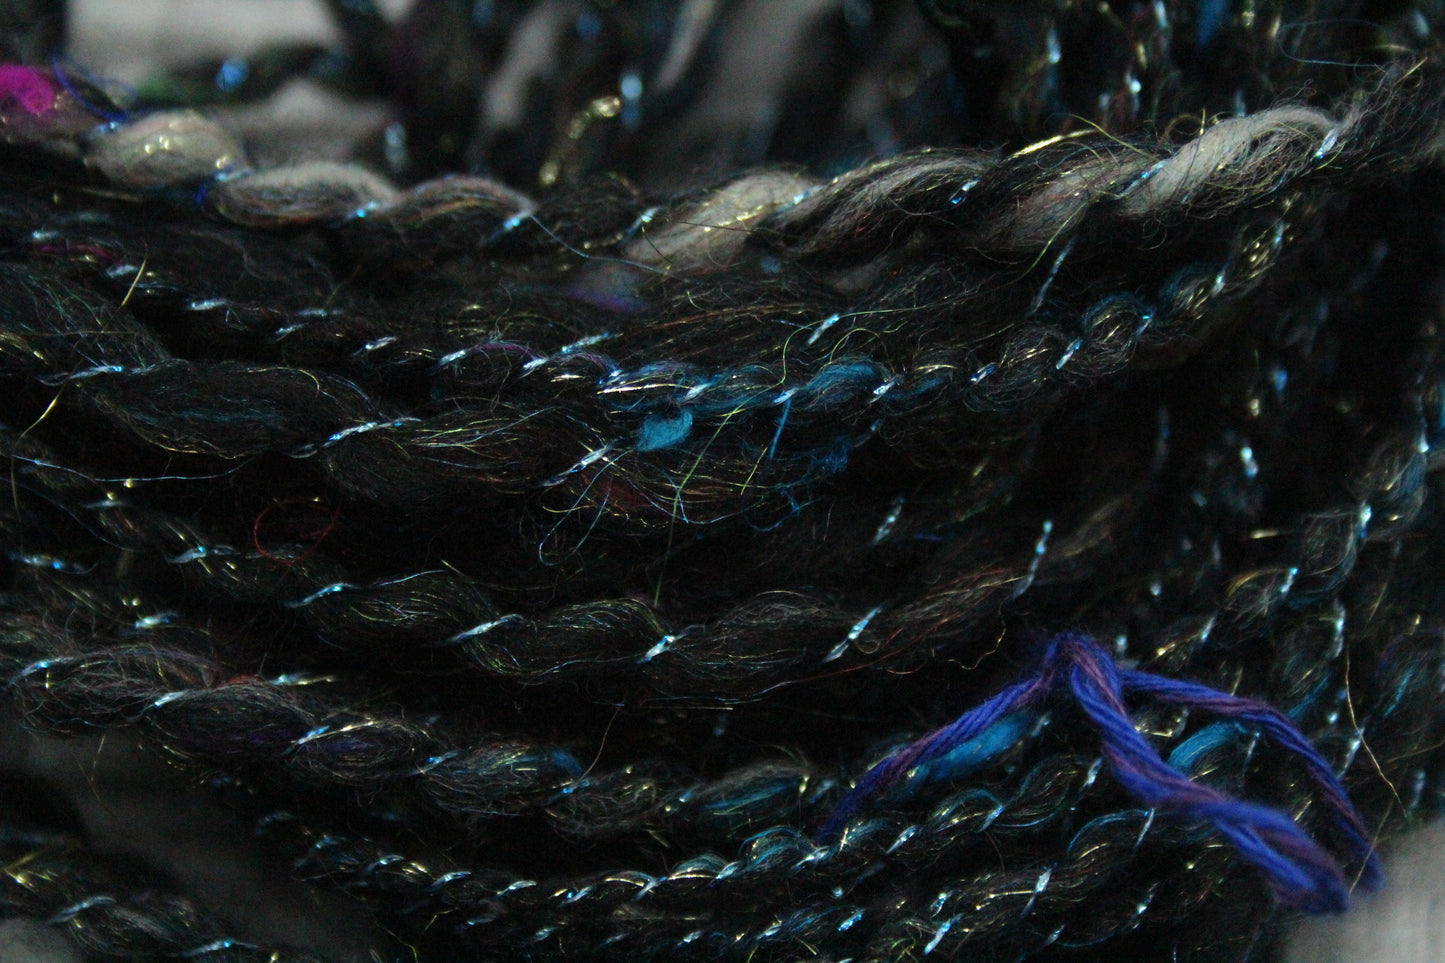 Handspun Yarn - Black and Blue - 29mtrs/32yards 40g/1.4oz - Yarn for crocheting. knitting, weaving...